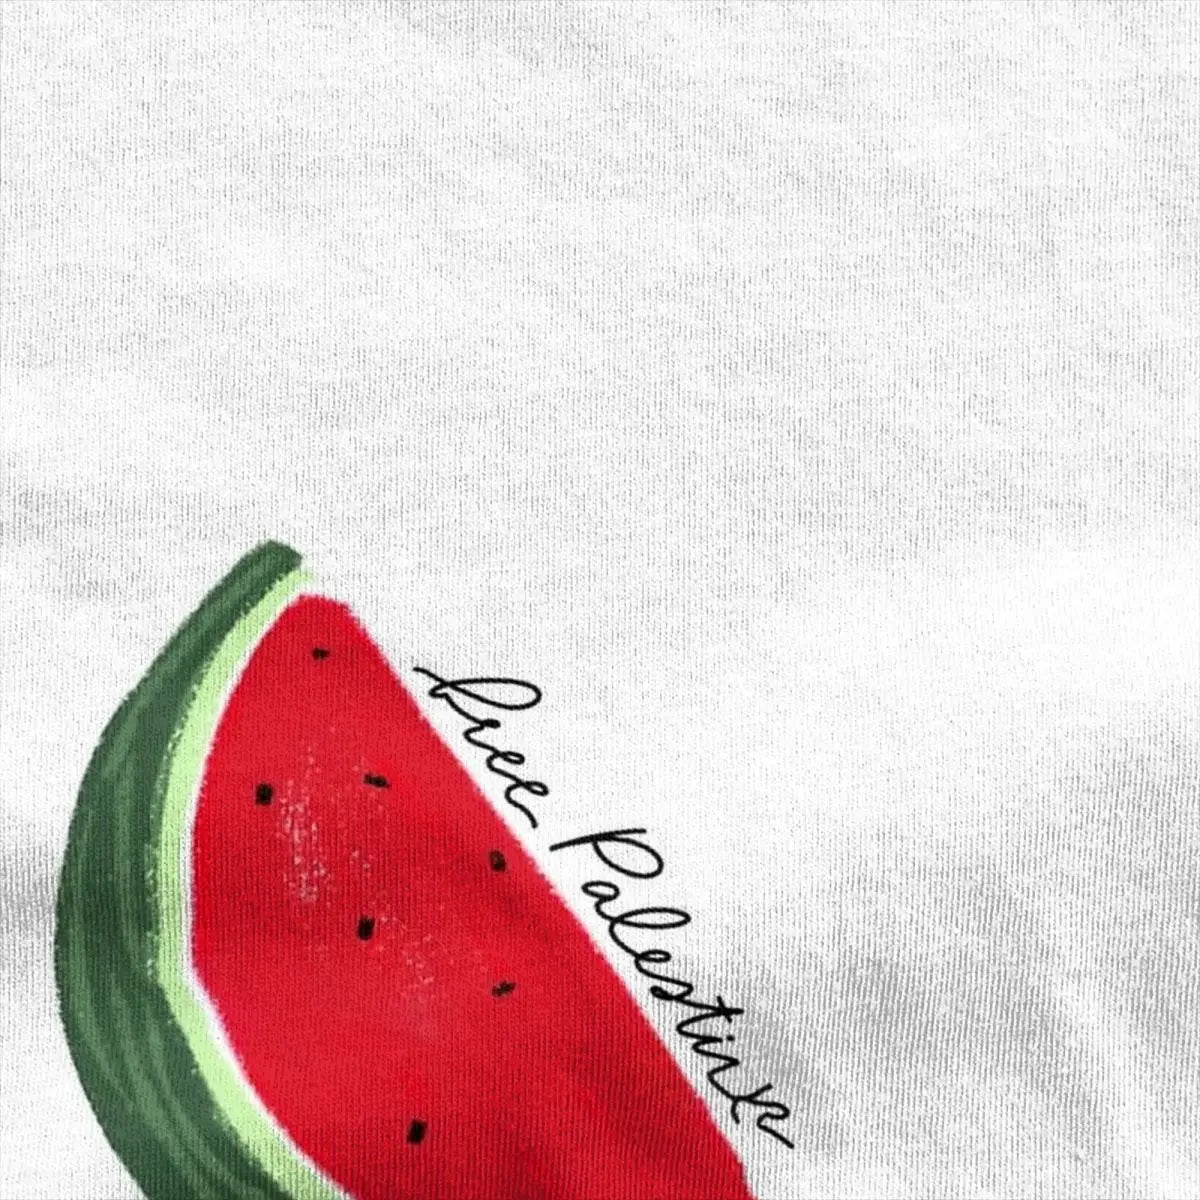 T Shirt Free Palestine